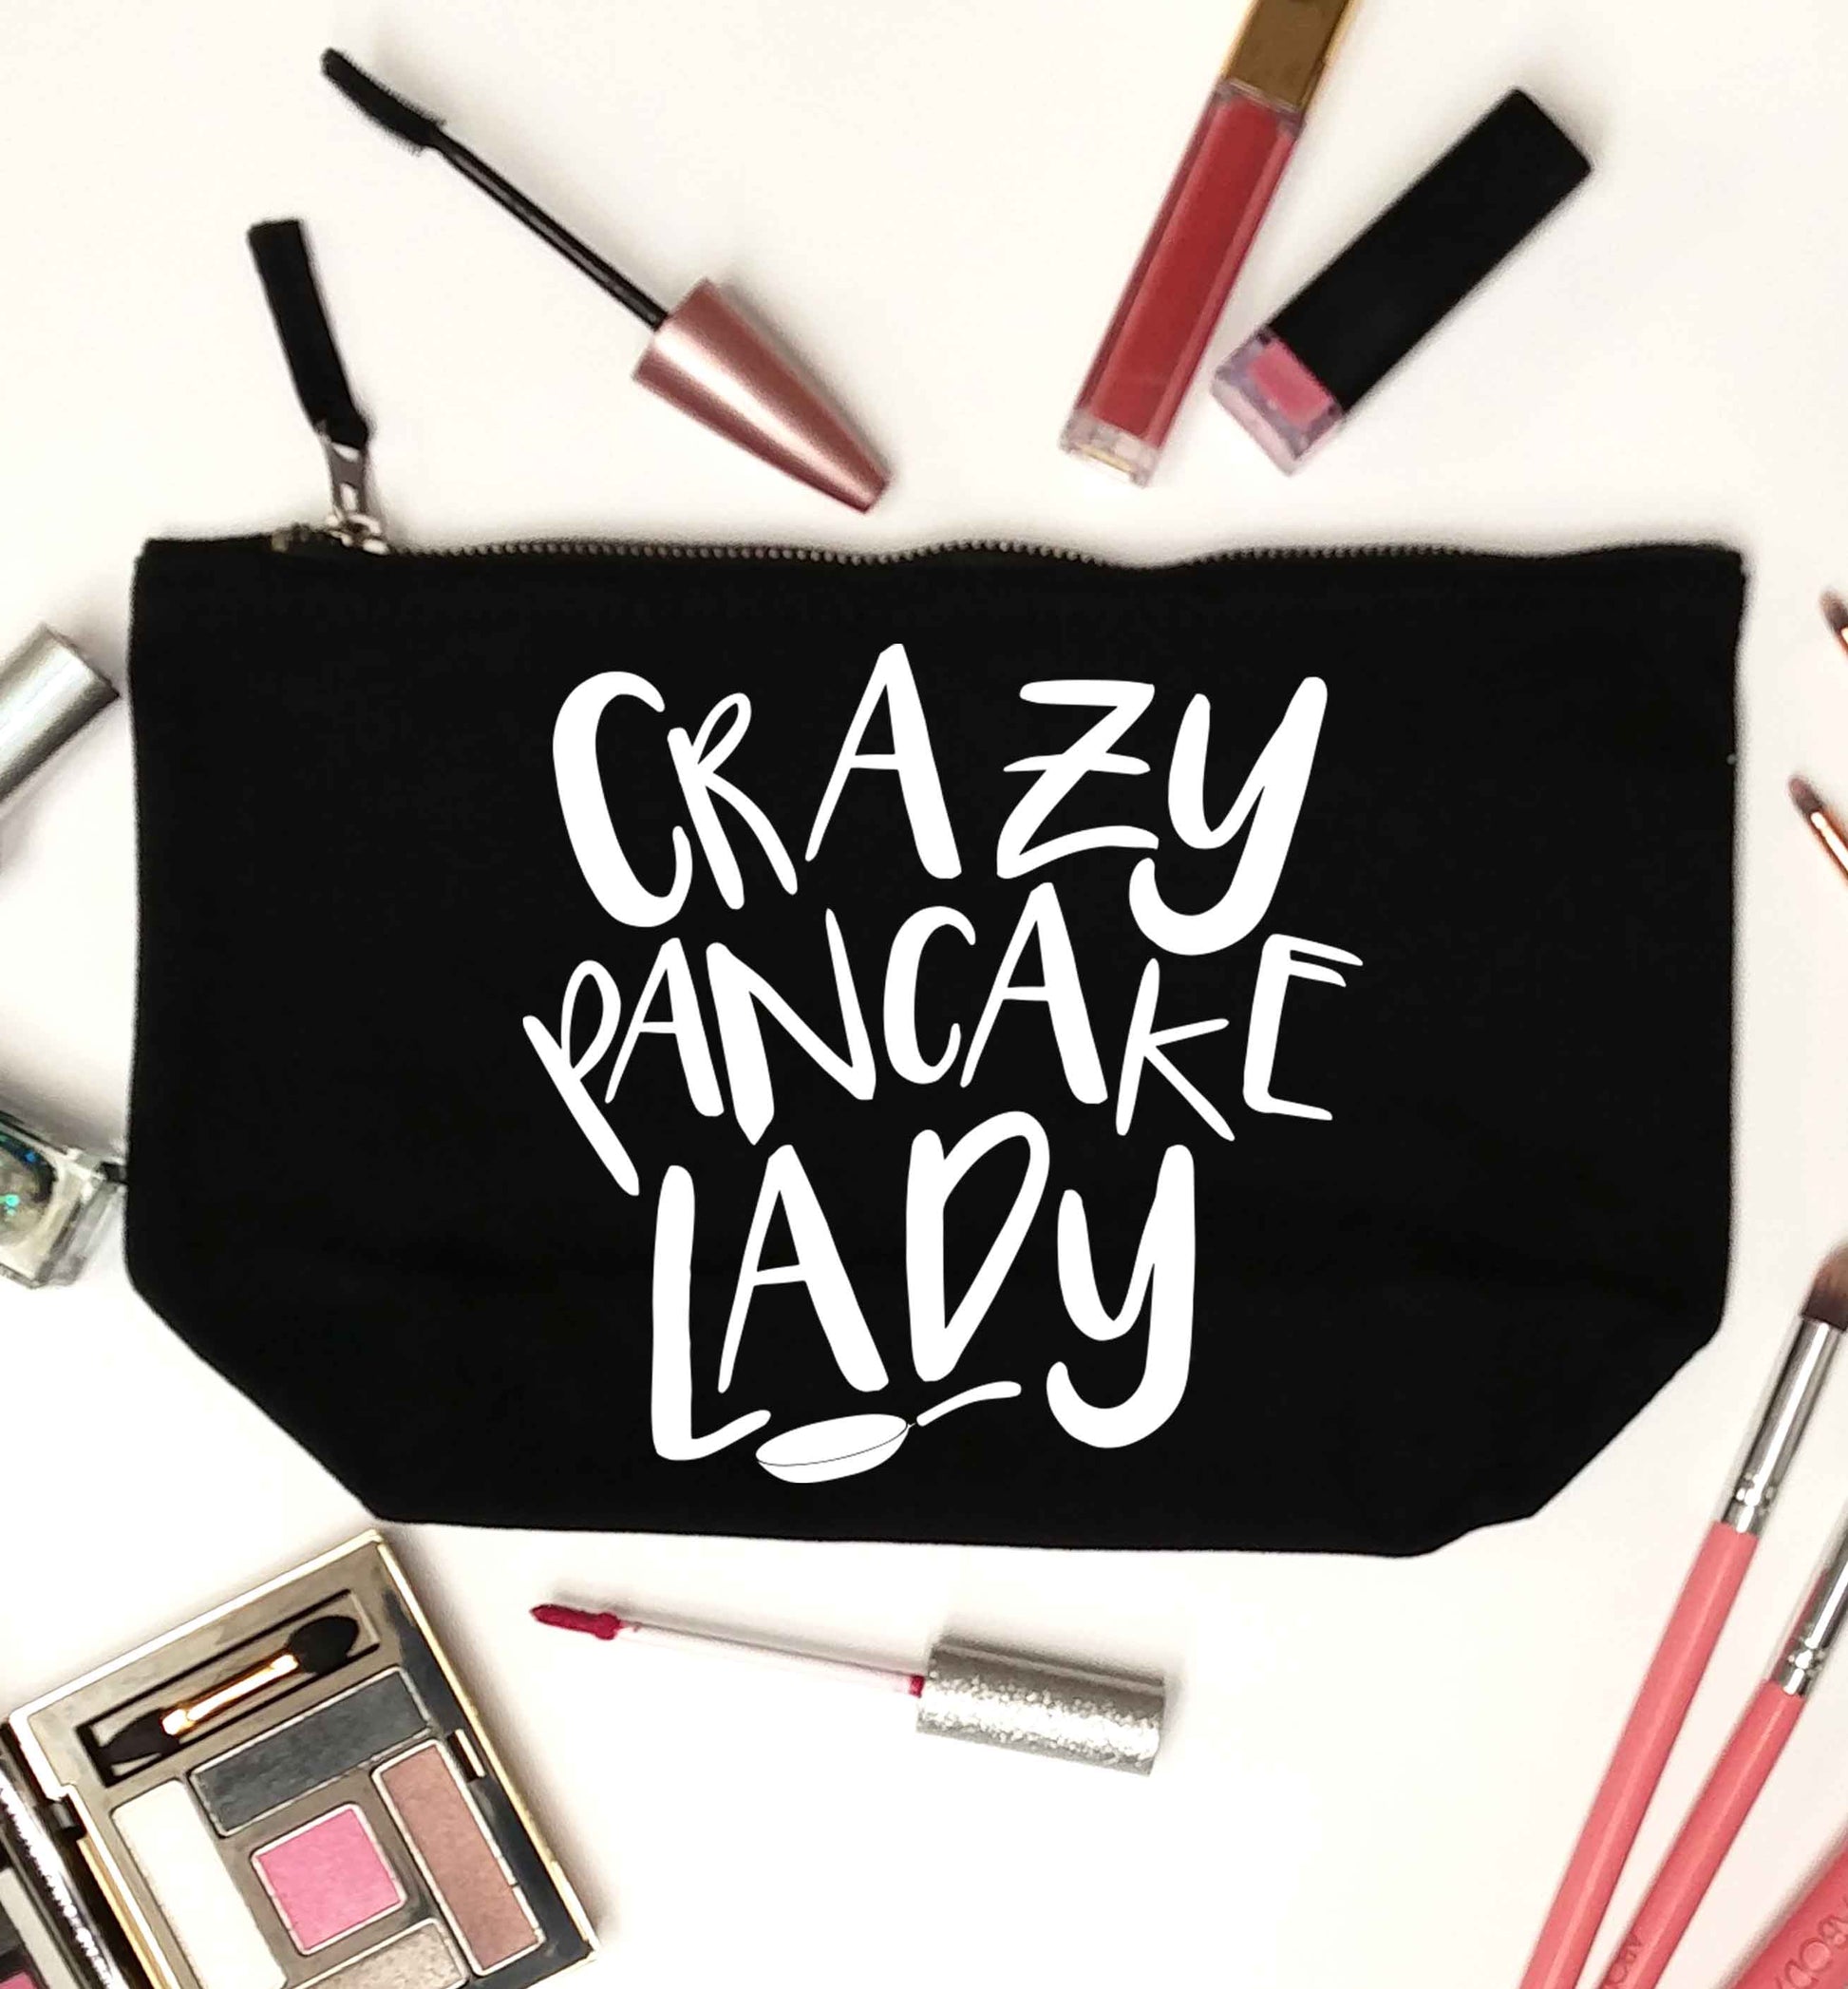 Crazy pancake lady black makeup bag